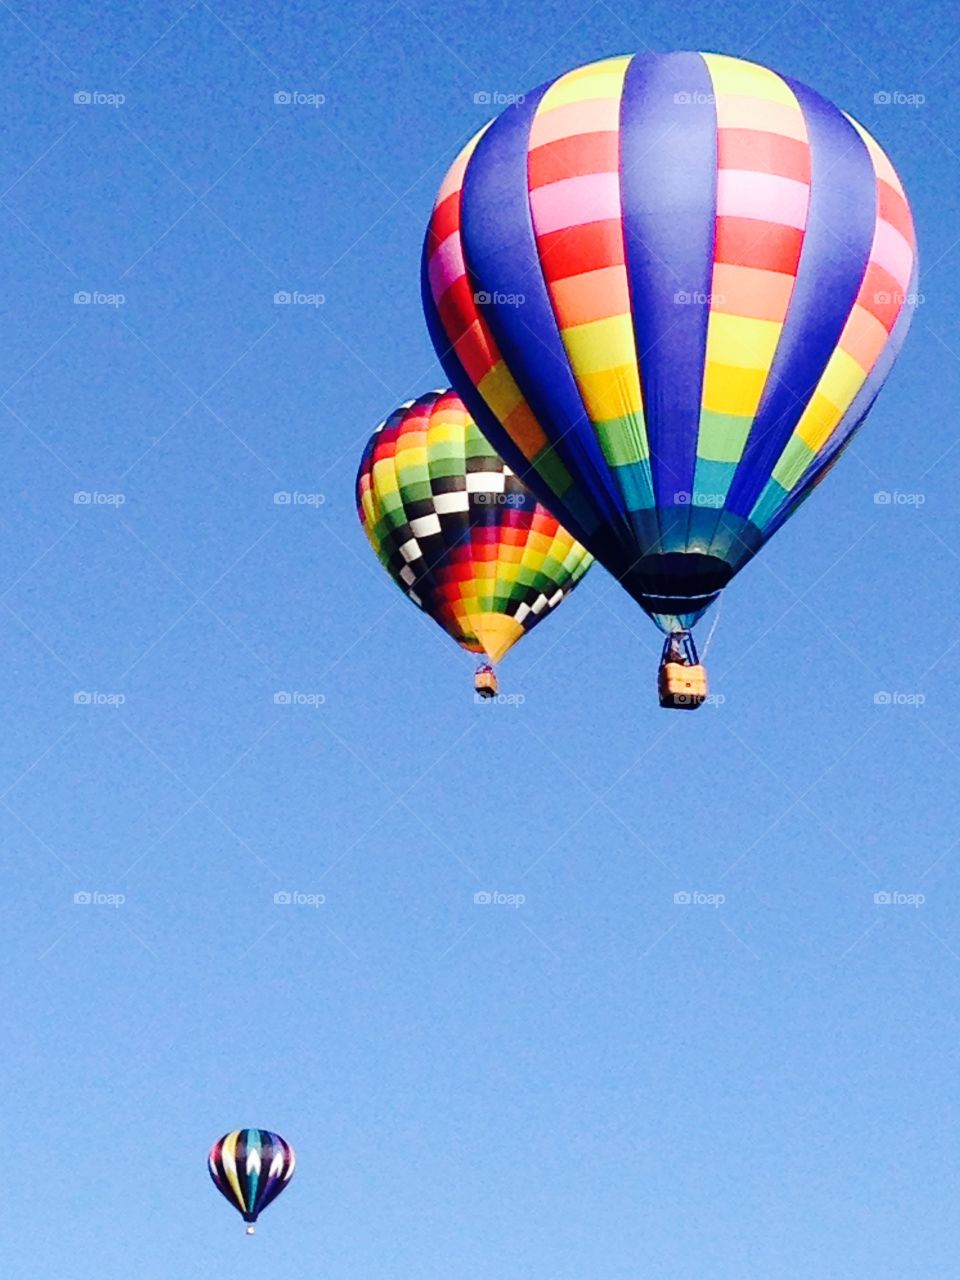 Hot air balloons taking off Statesville North Carolina. 